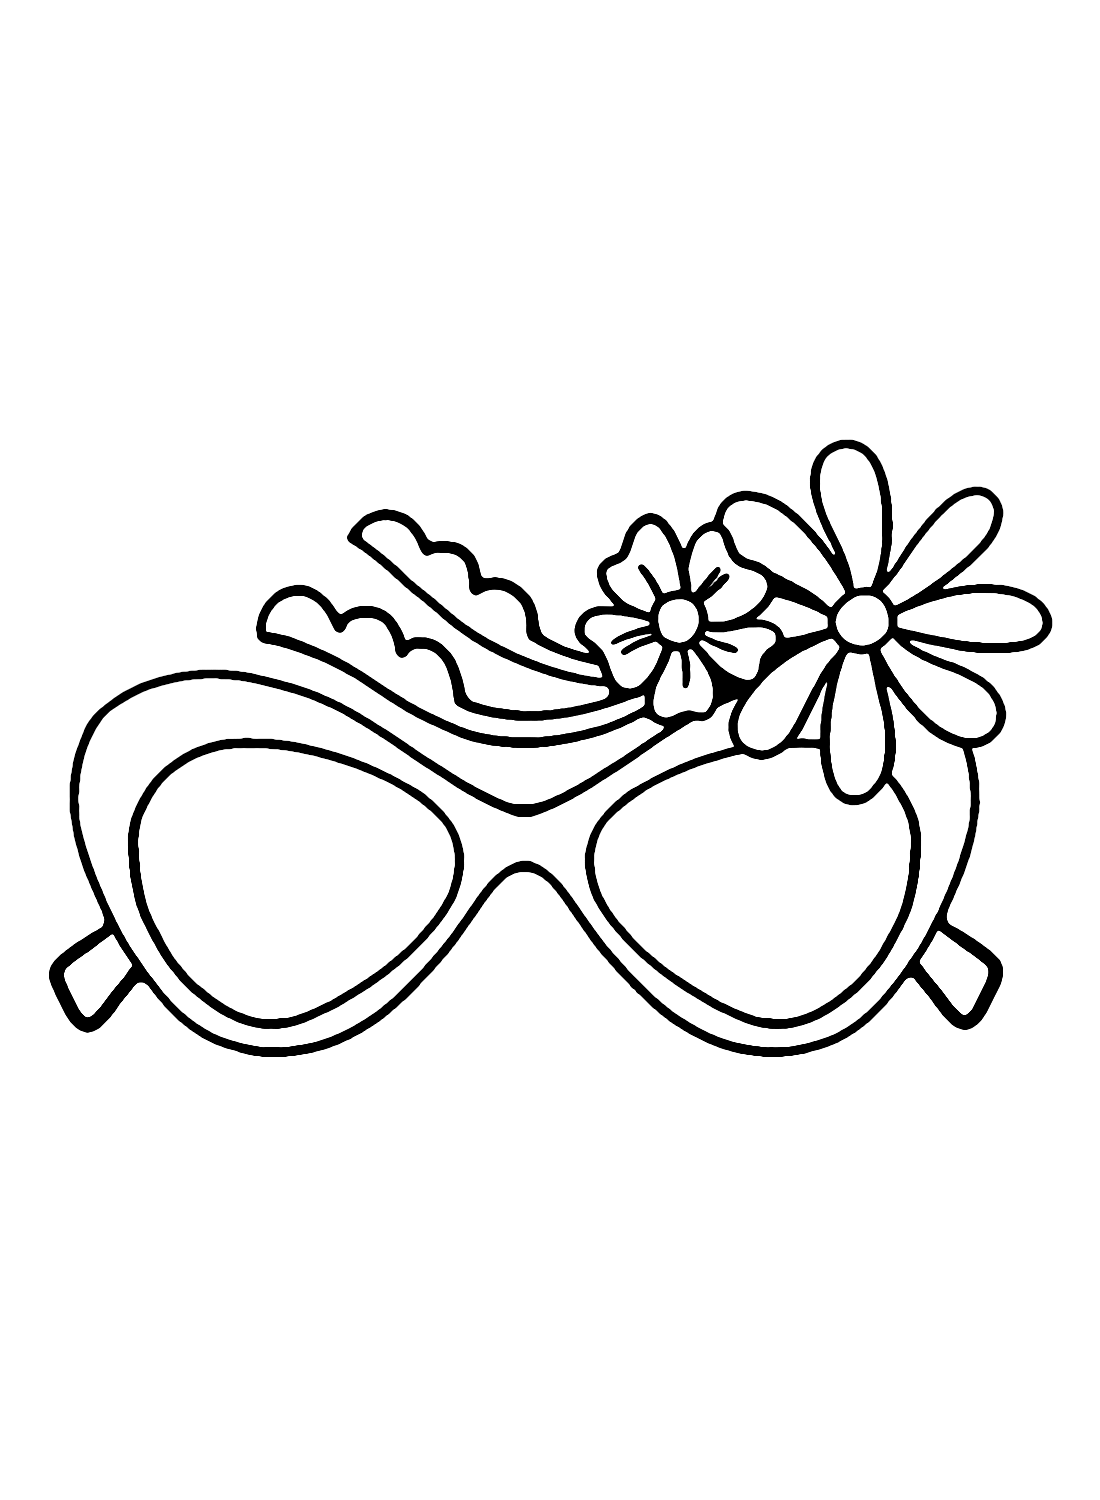 Fashion Sunglasses Coloring Page